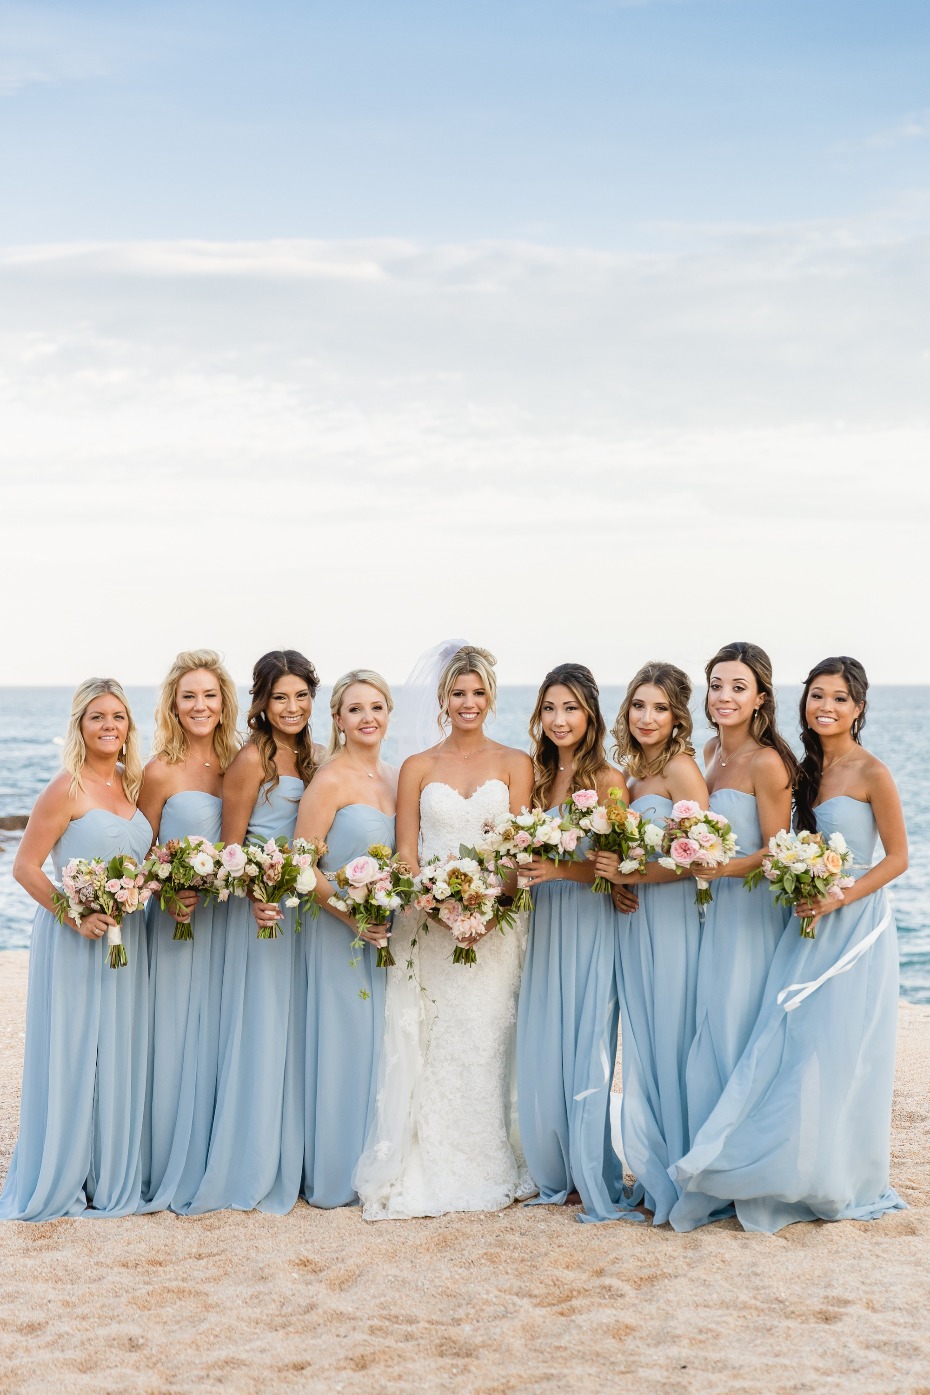 Blue bridesmaid dresses in Mexico